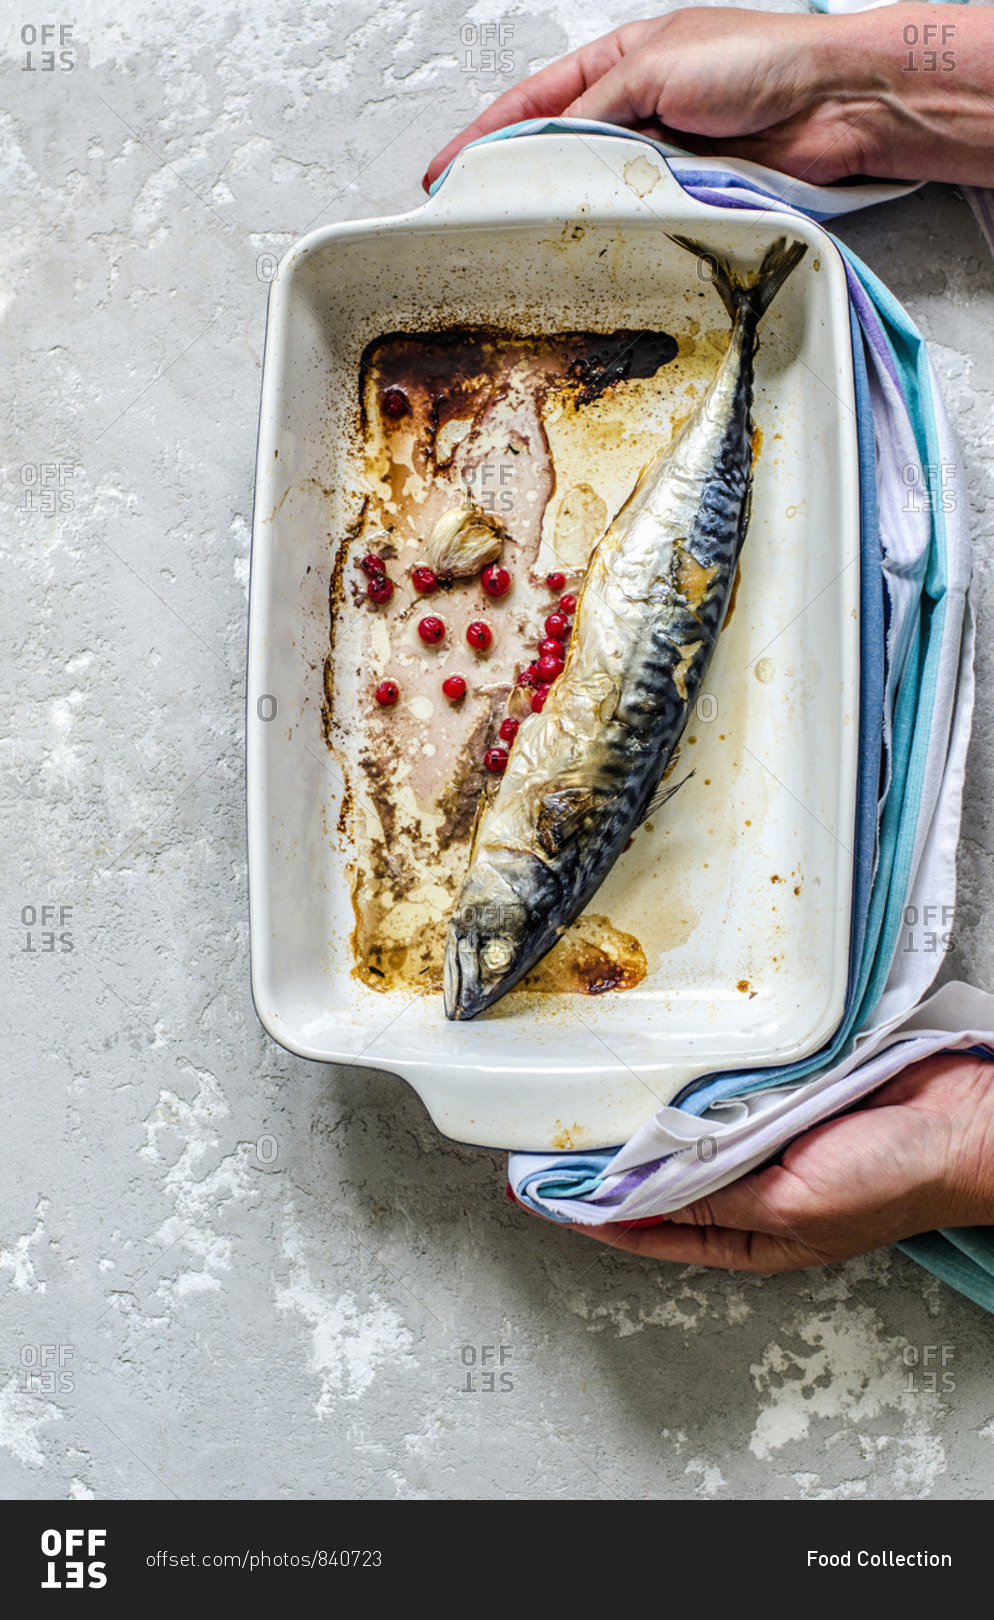 Fried mackerel in a baking dish